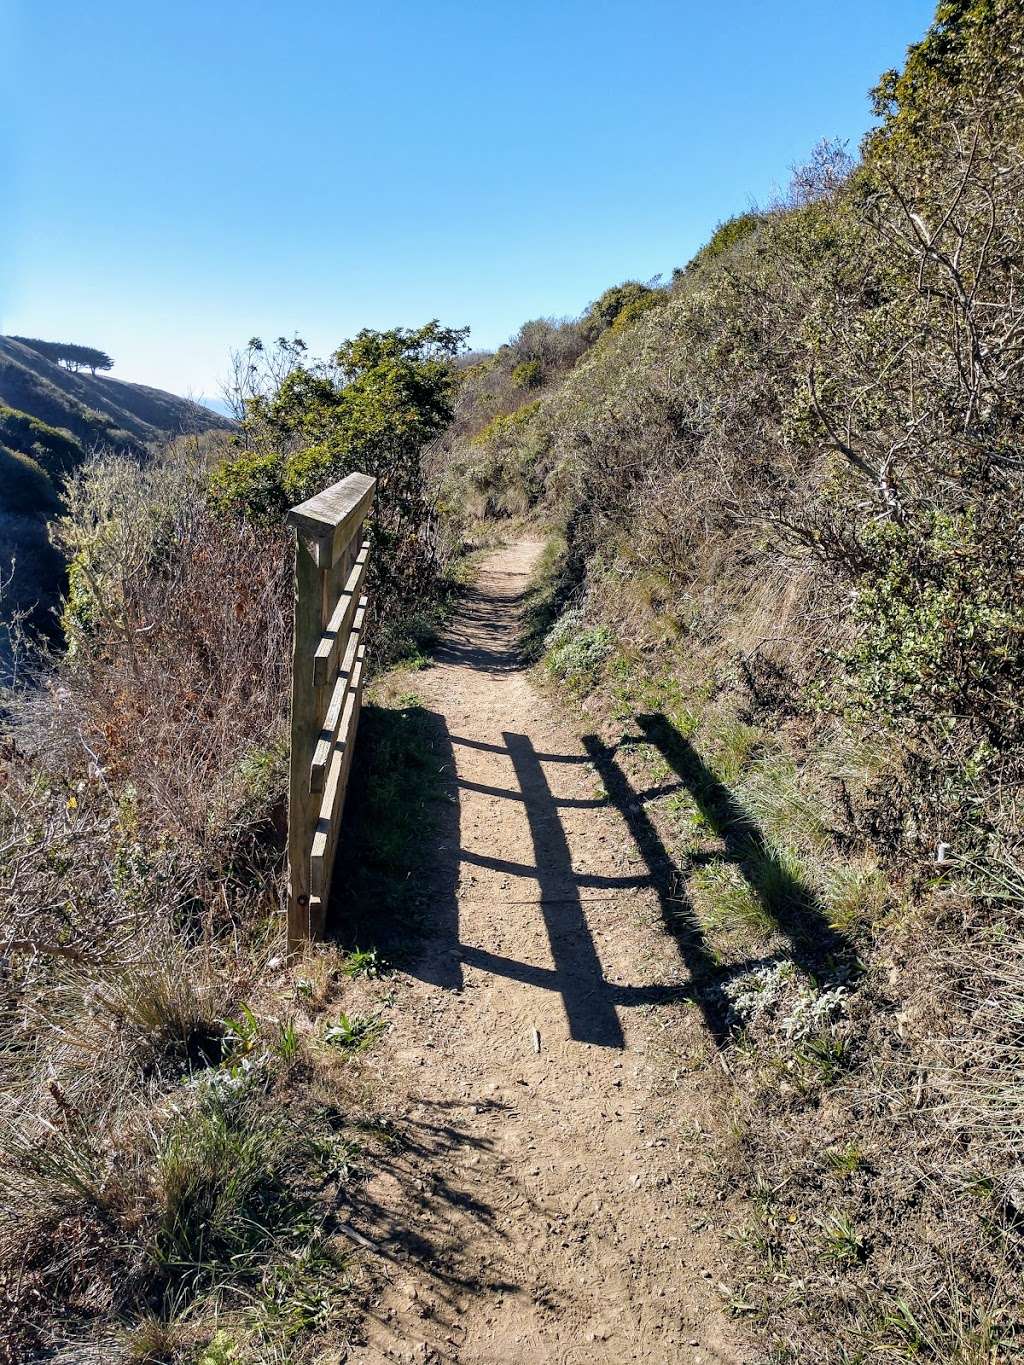 Pinnacle Gulch Trail | 20600 Mockingbird Dr, Bodega Bay, CA 94923, USA